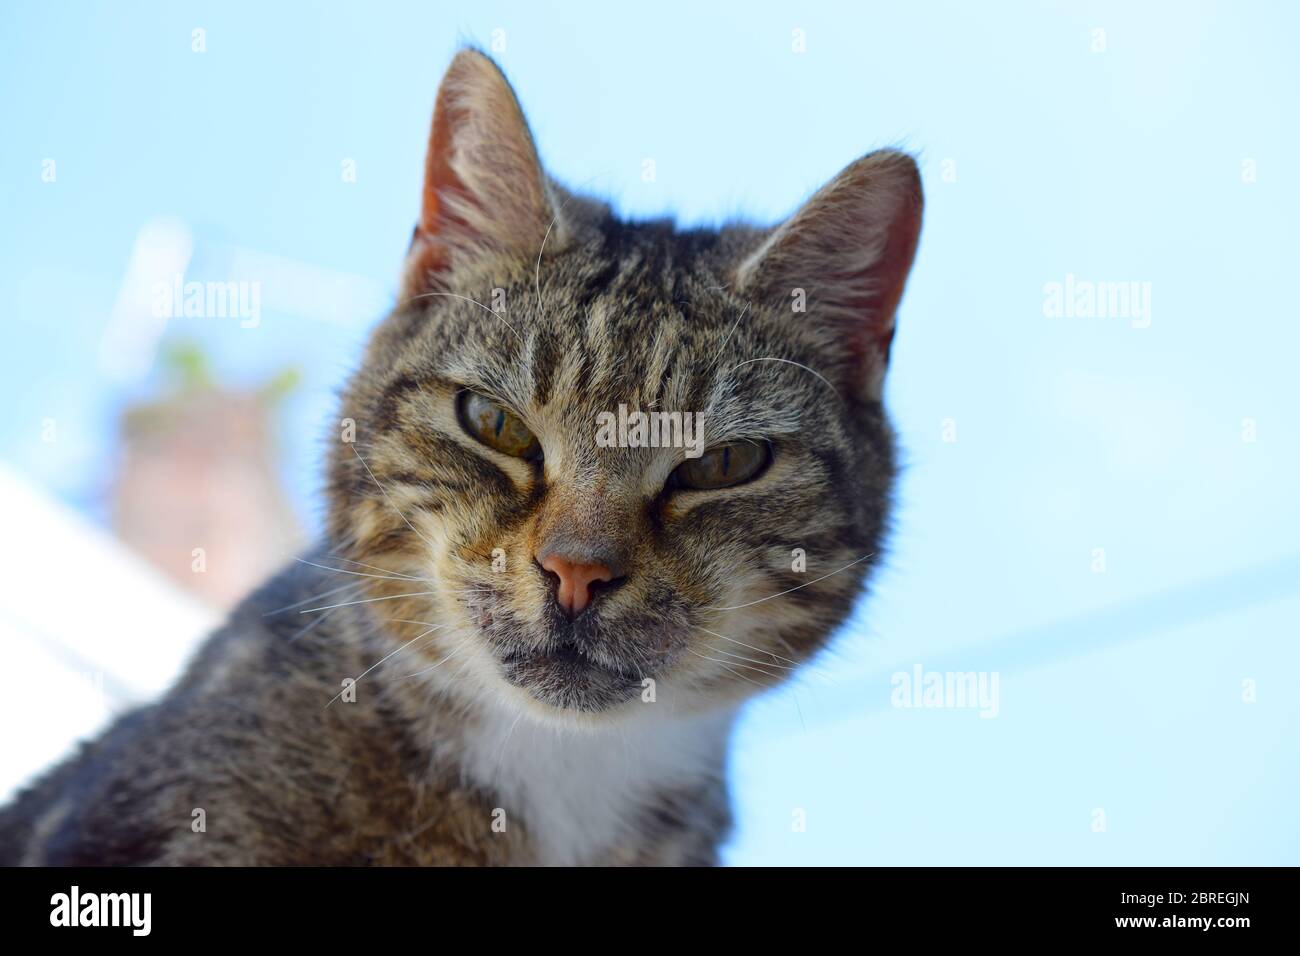 Stray cat face on blue sky background Stock Photo